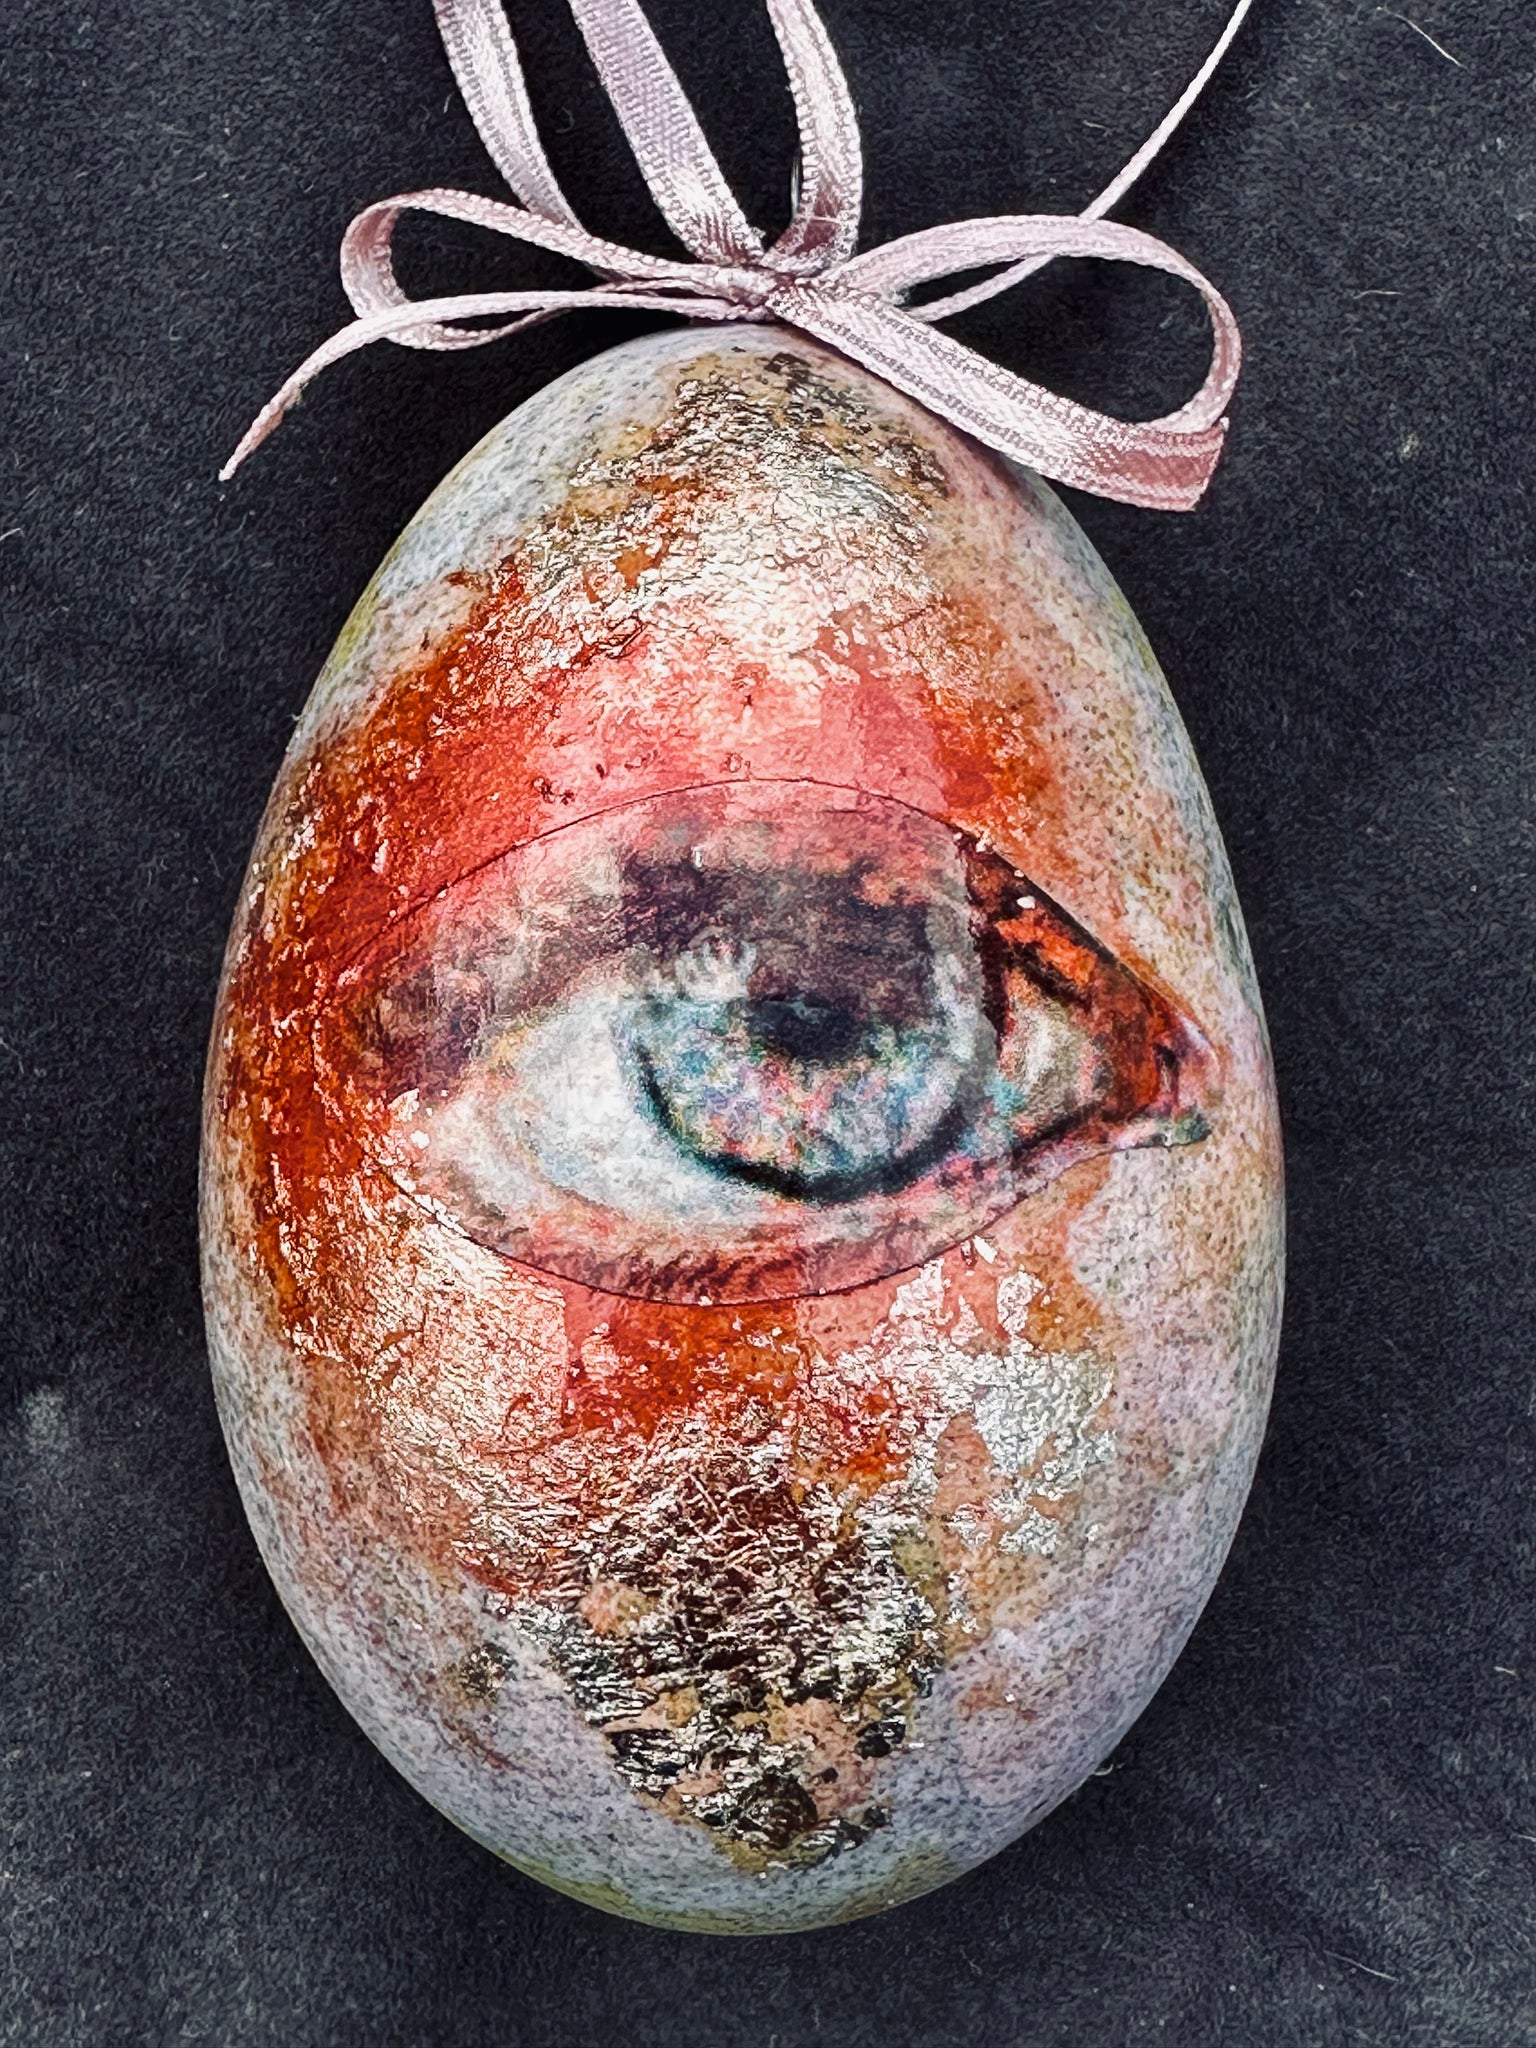 the EYE egg, gåseæg